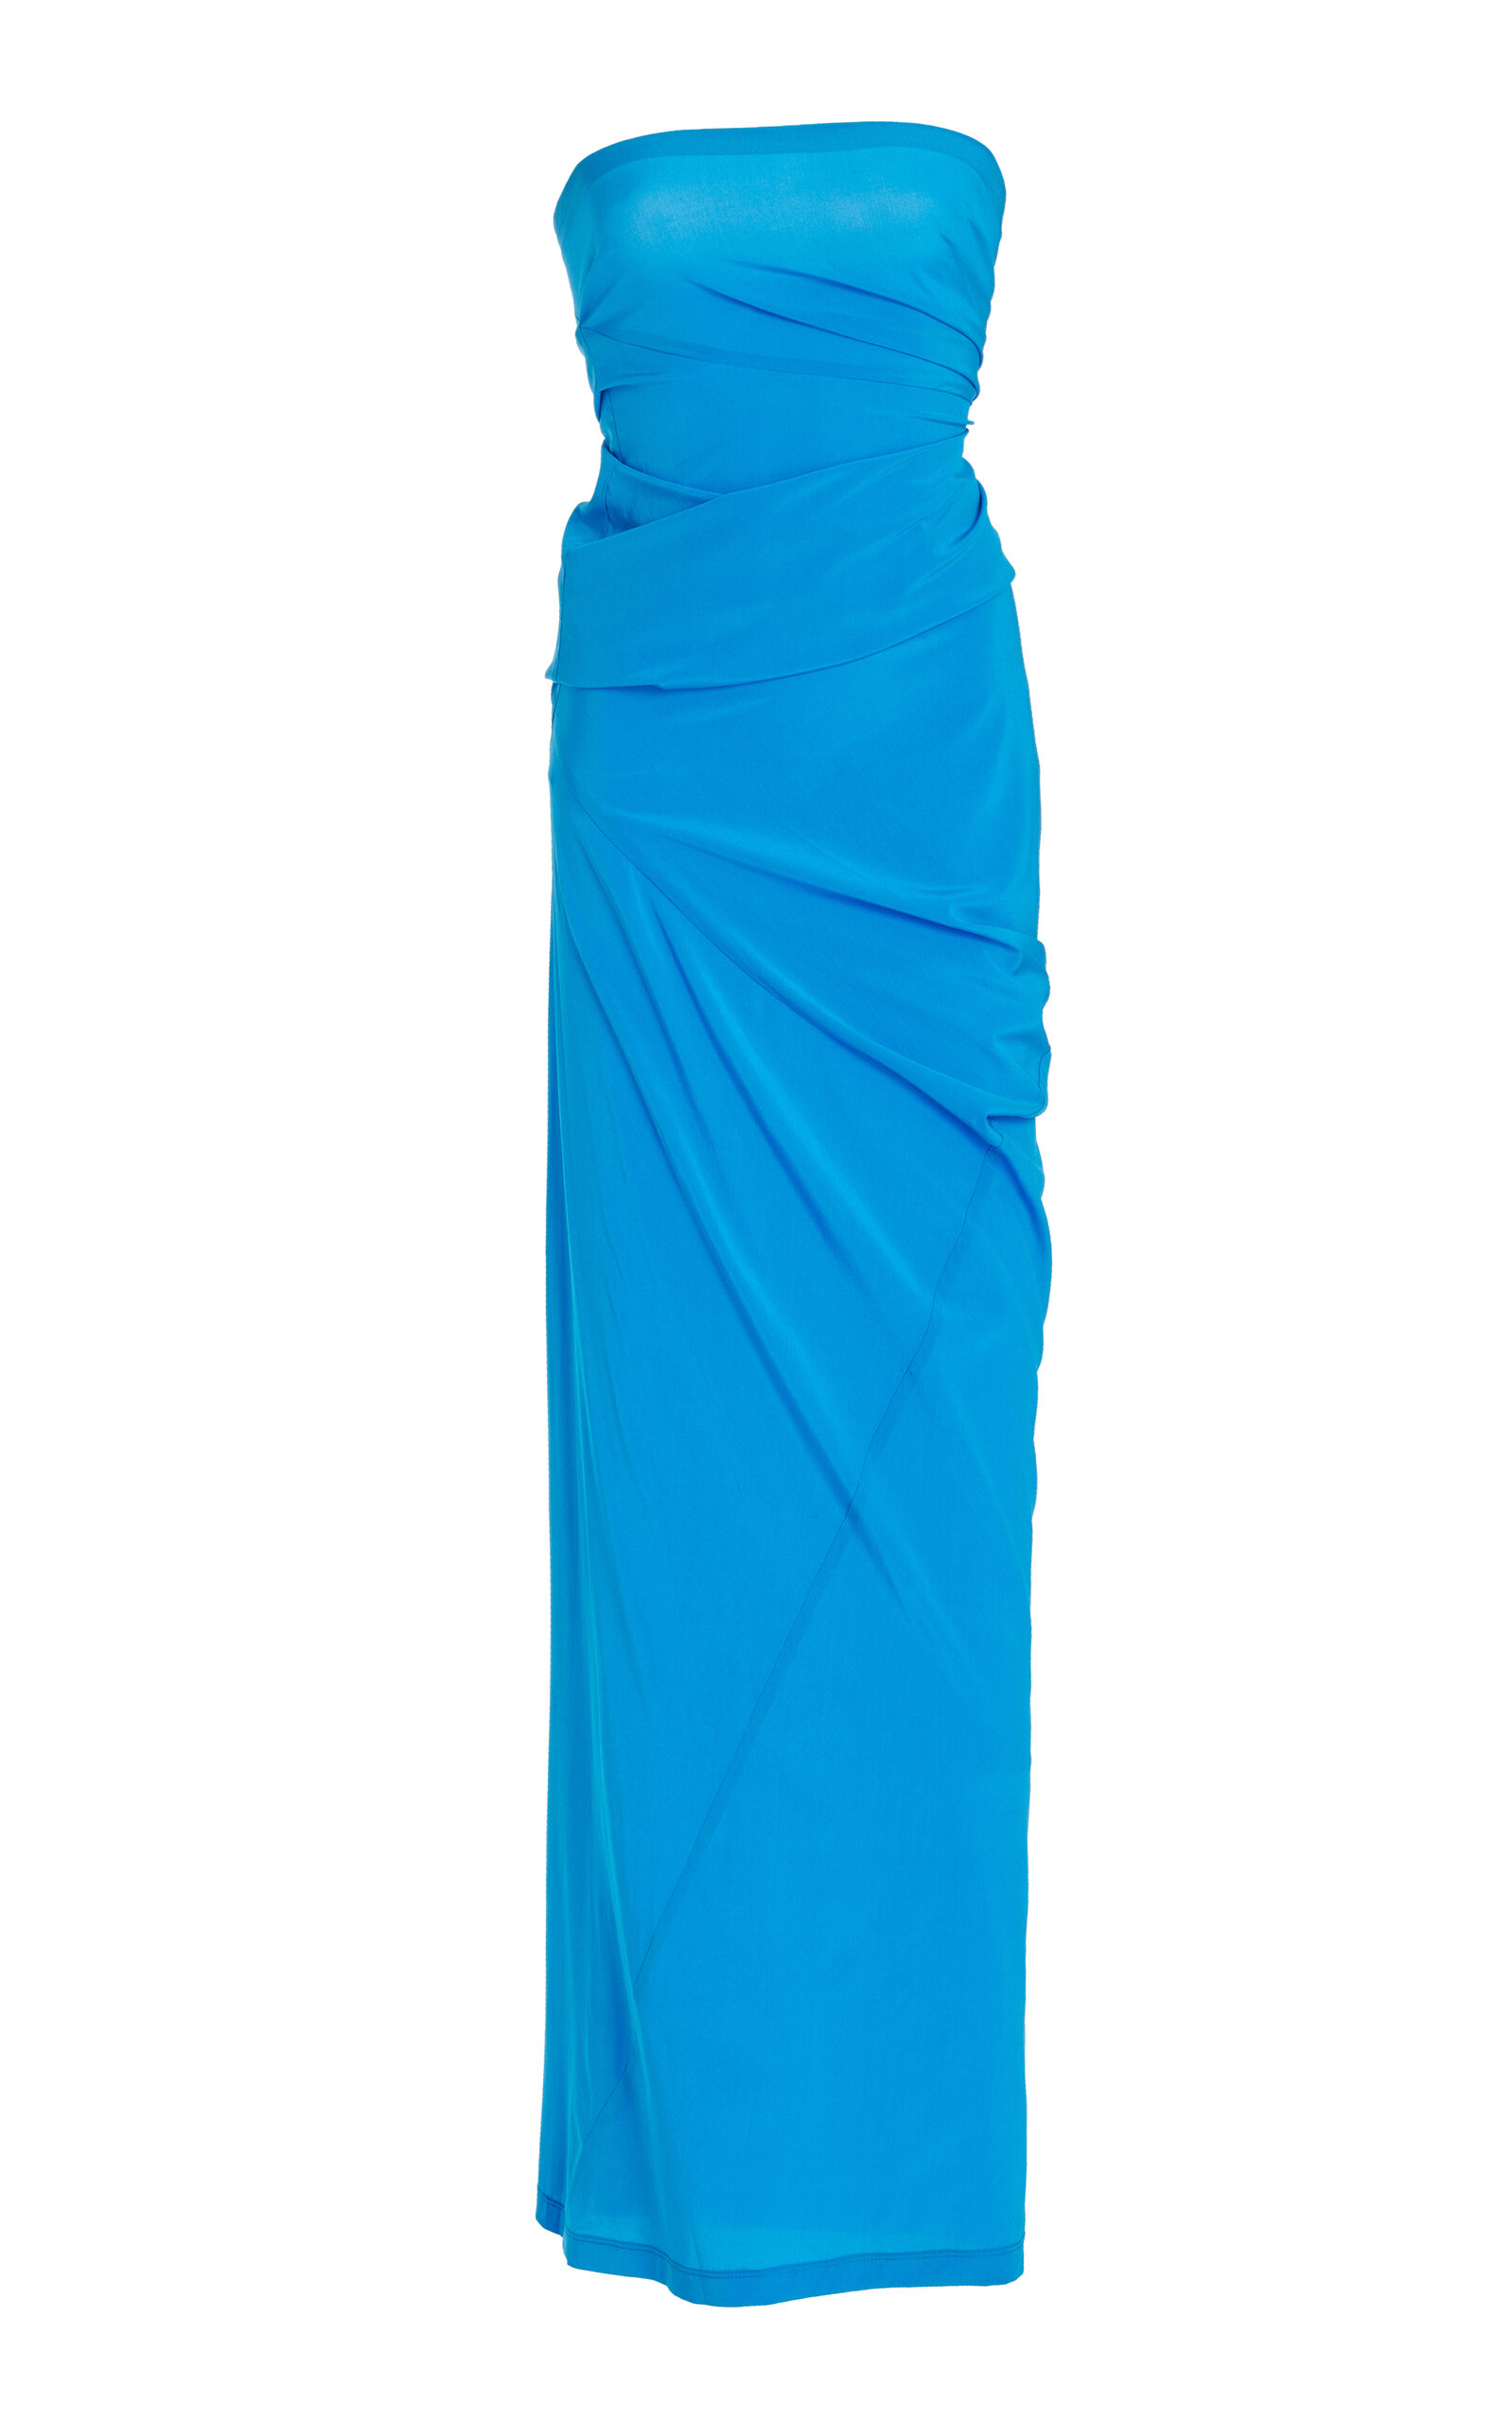 Proenza Schouler - Odette Strapless Silk-Blend Maxi Dress - Blue - US 4 - Moda Operandi